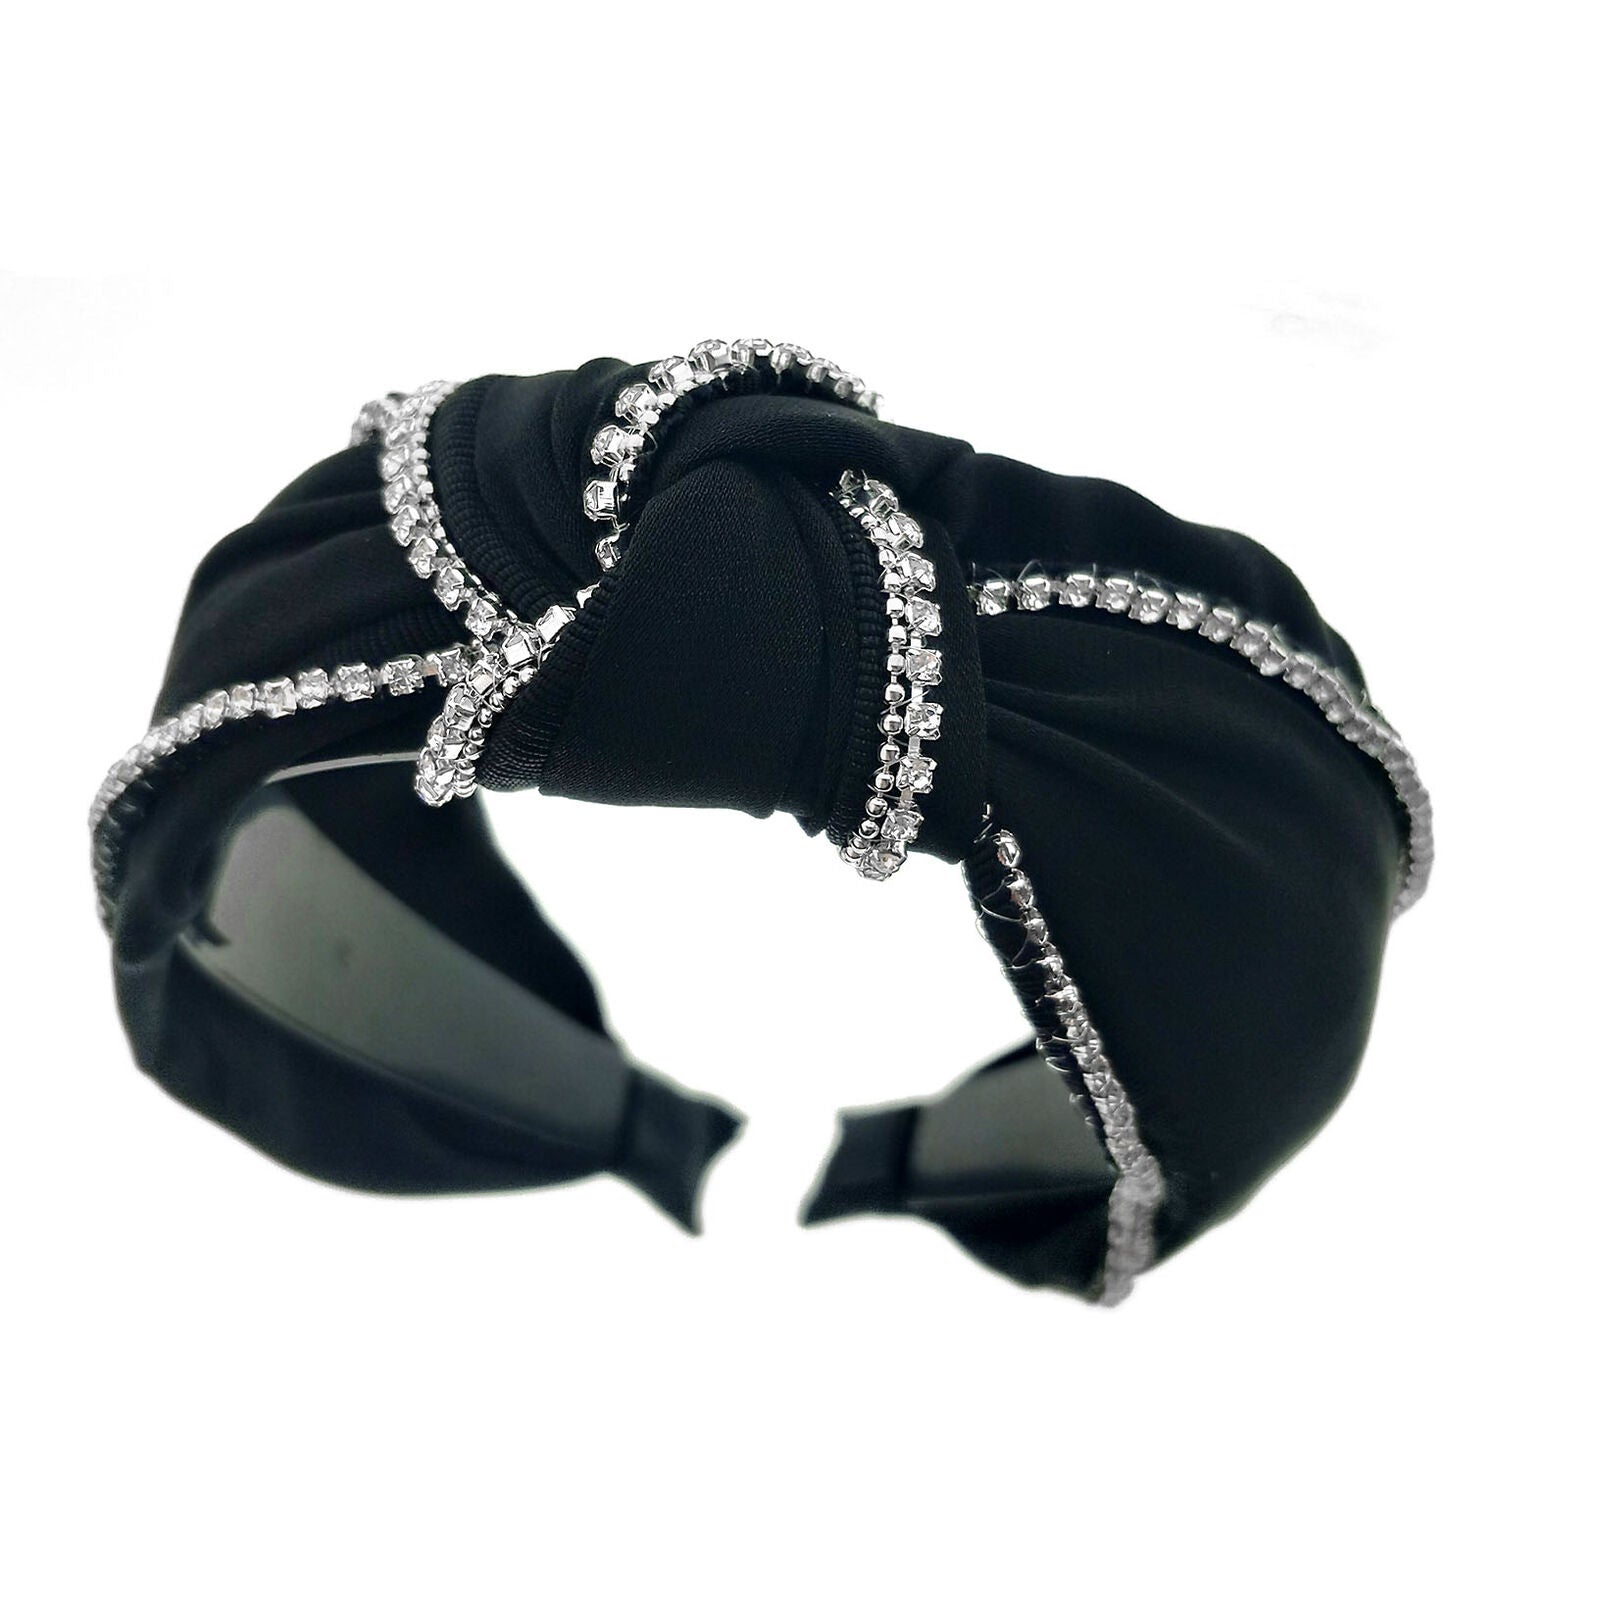 Women's Crystal Tie Headband Hairband Knot Twist Wide Hair Band Hoop Accessories